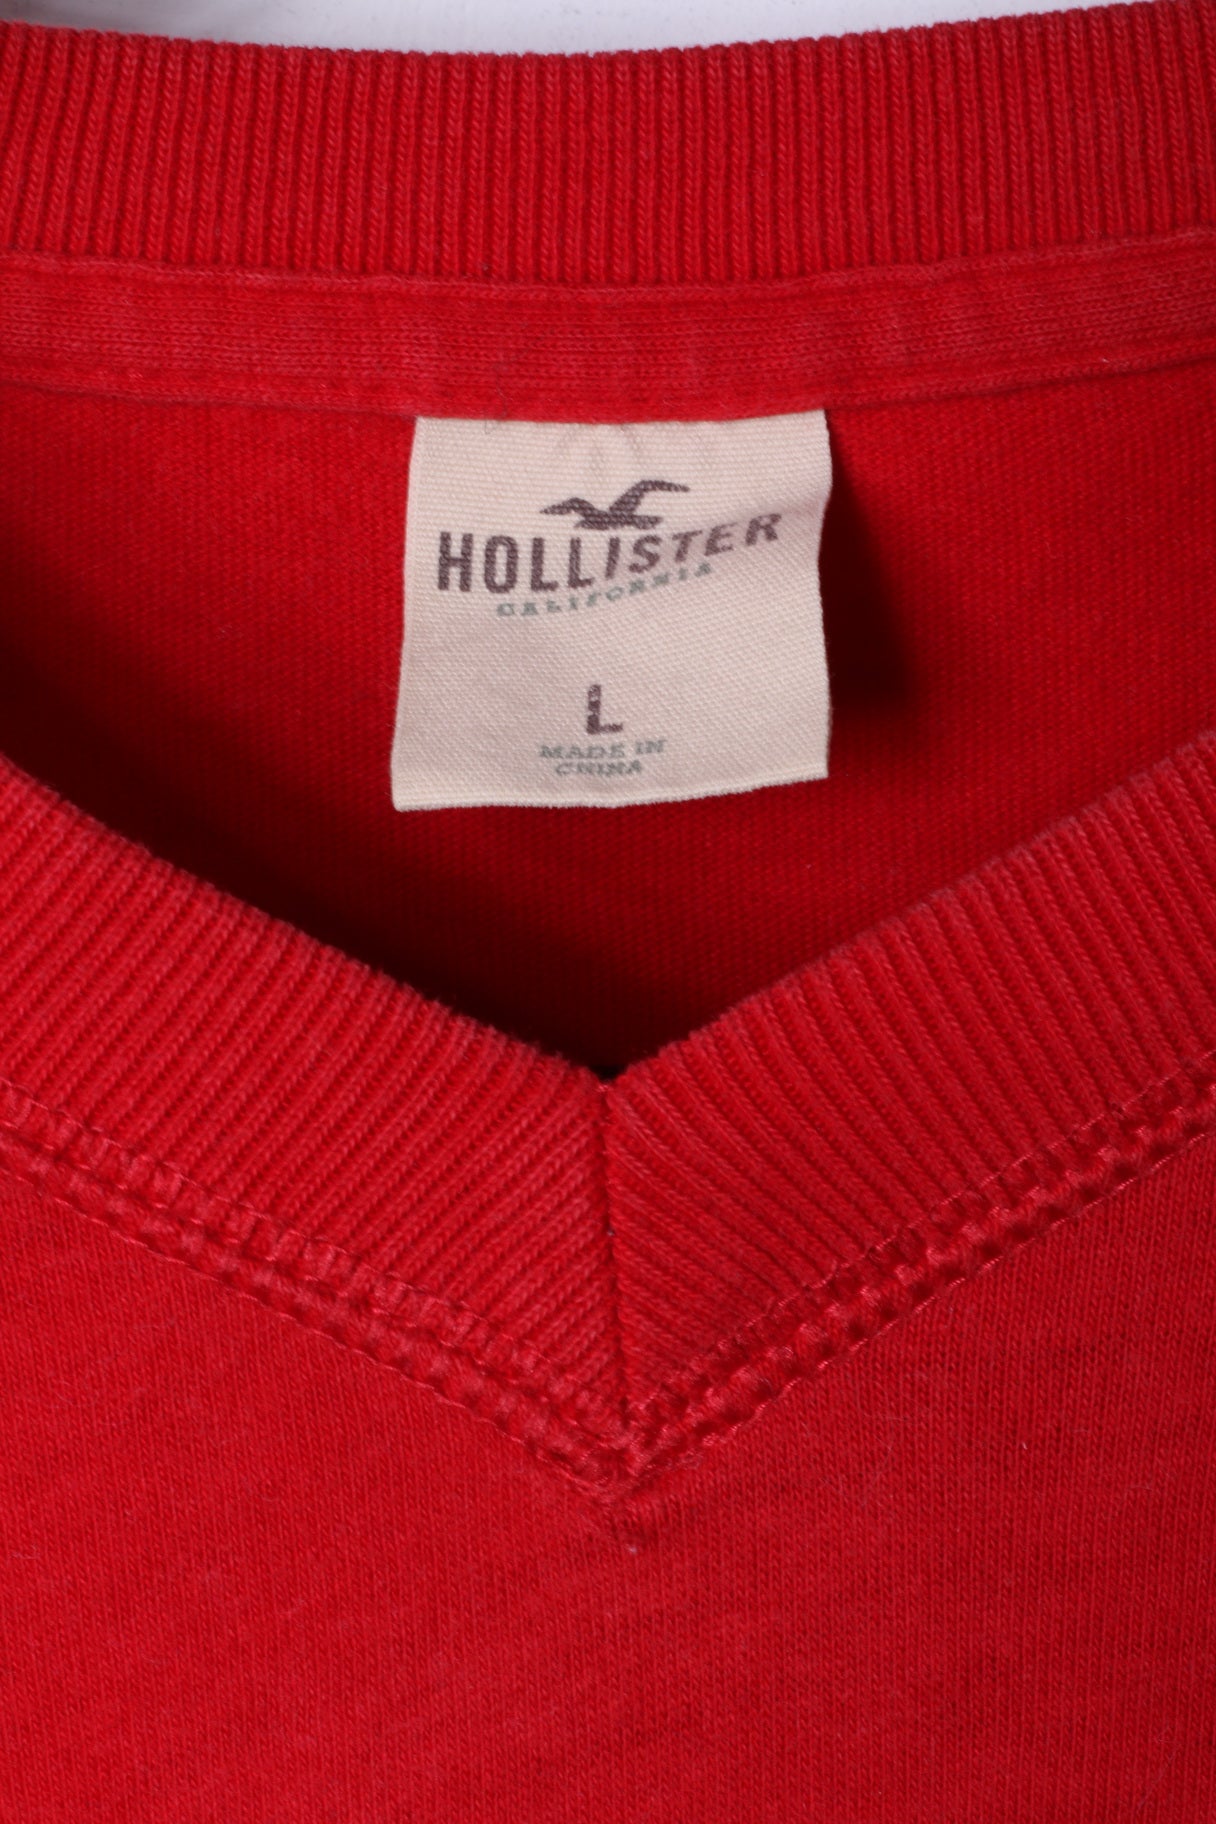 Hollister California Mens L (M) T- Shirt Red Cotton V Neck Classic Top